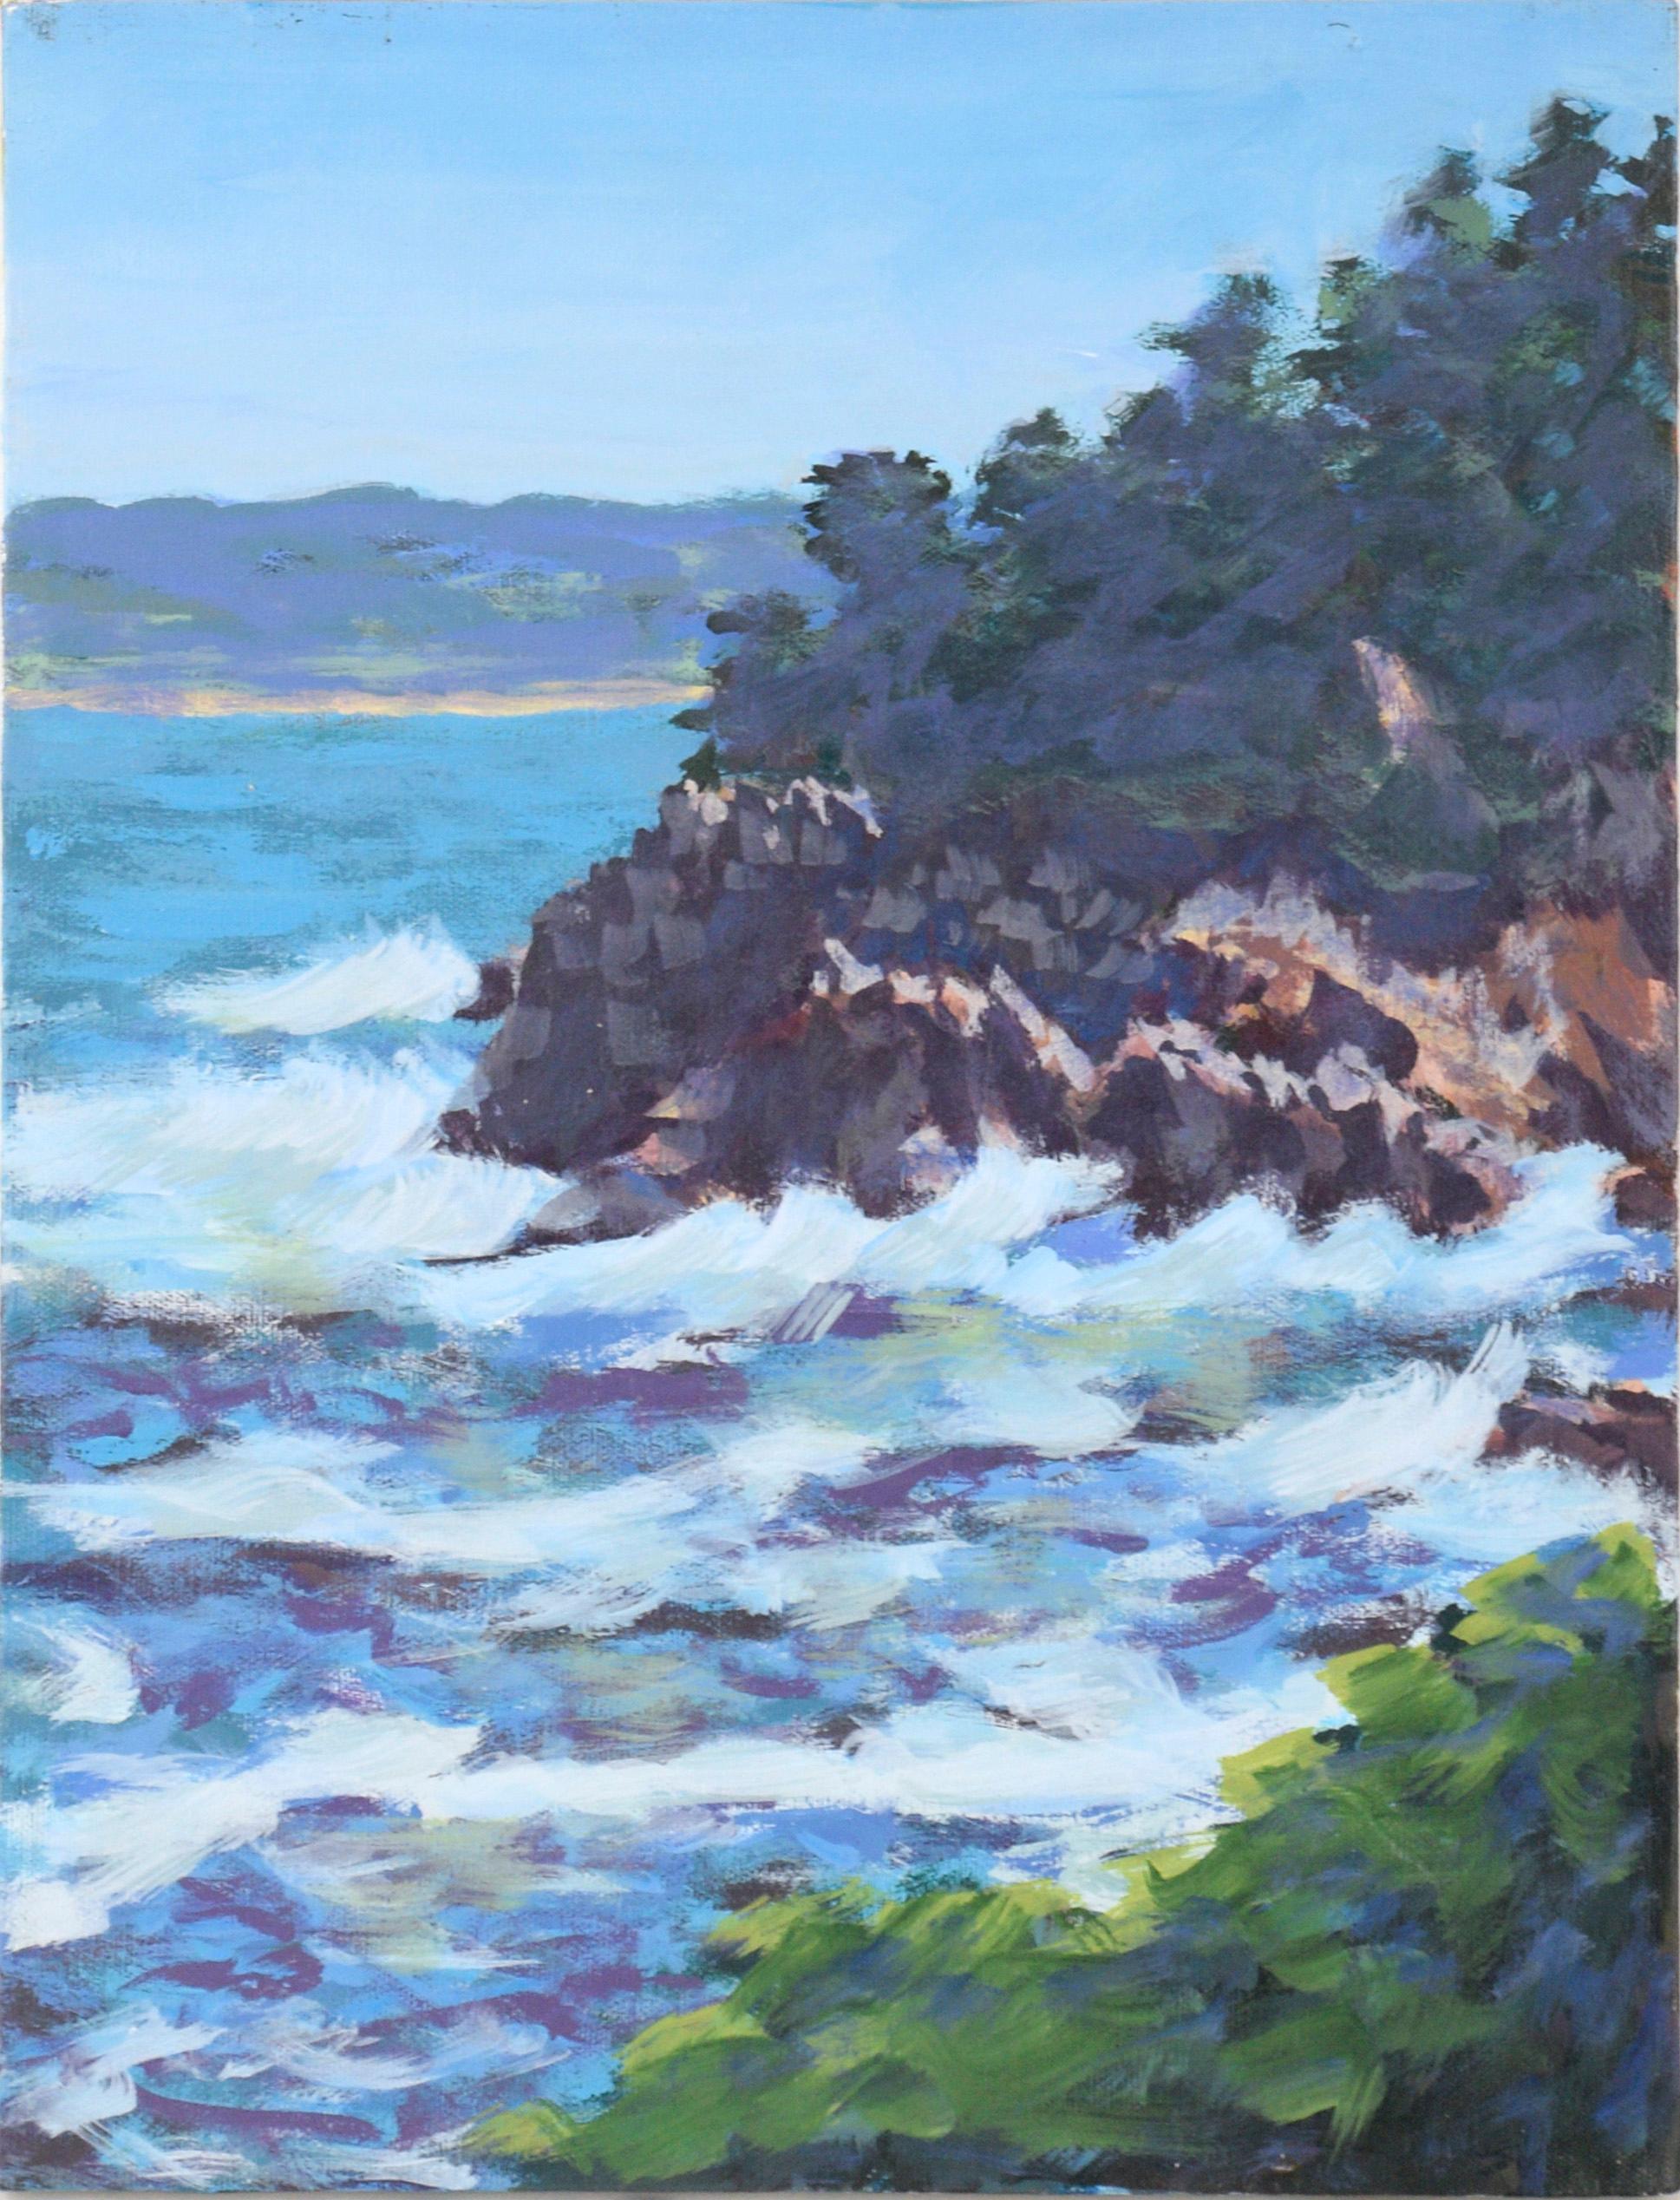 Nick White Landscape Painting - Big Sur Coastal Cliffs - California Plein Aire Landscape in Acrylic on Canvas